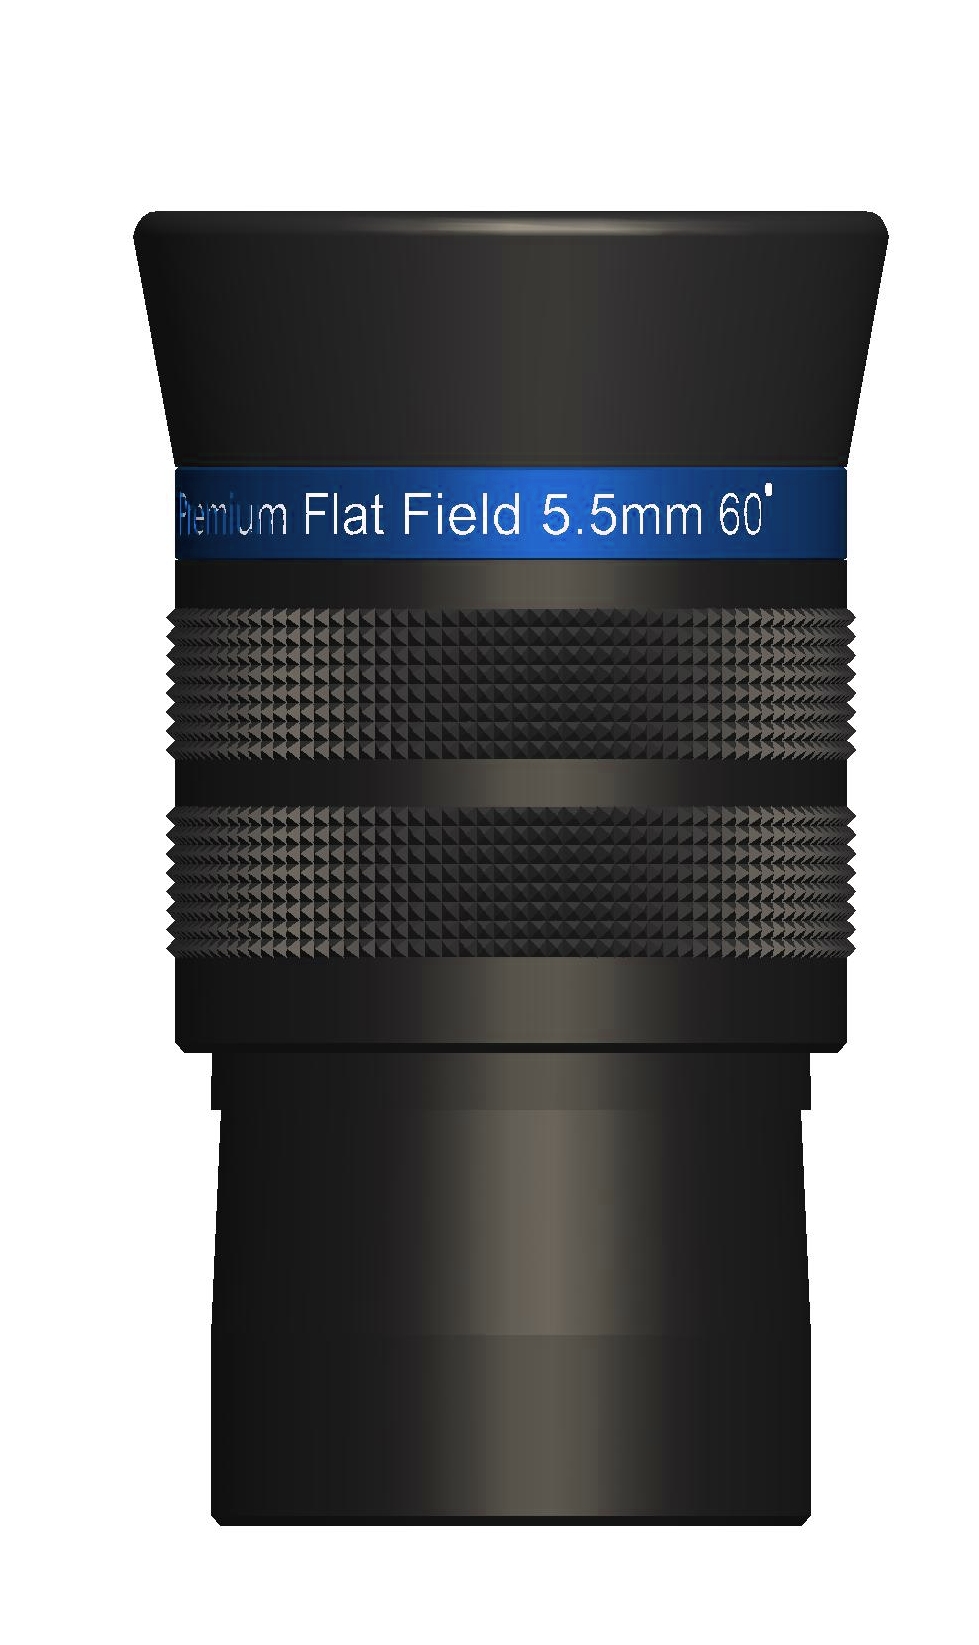   Oculare Auriga Premium Flat Field 5.5mm  